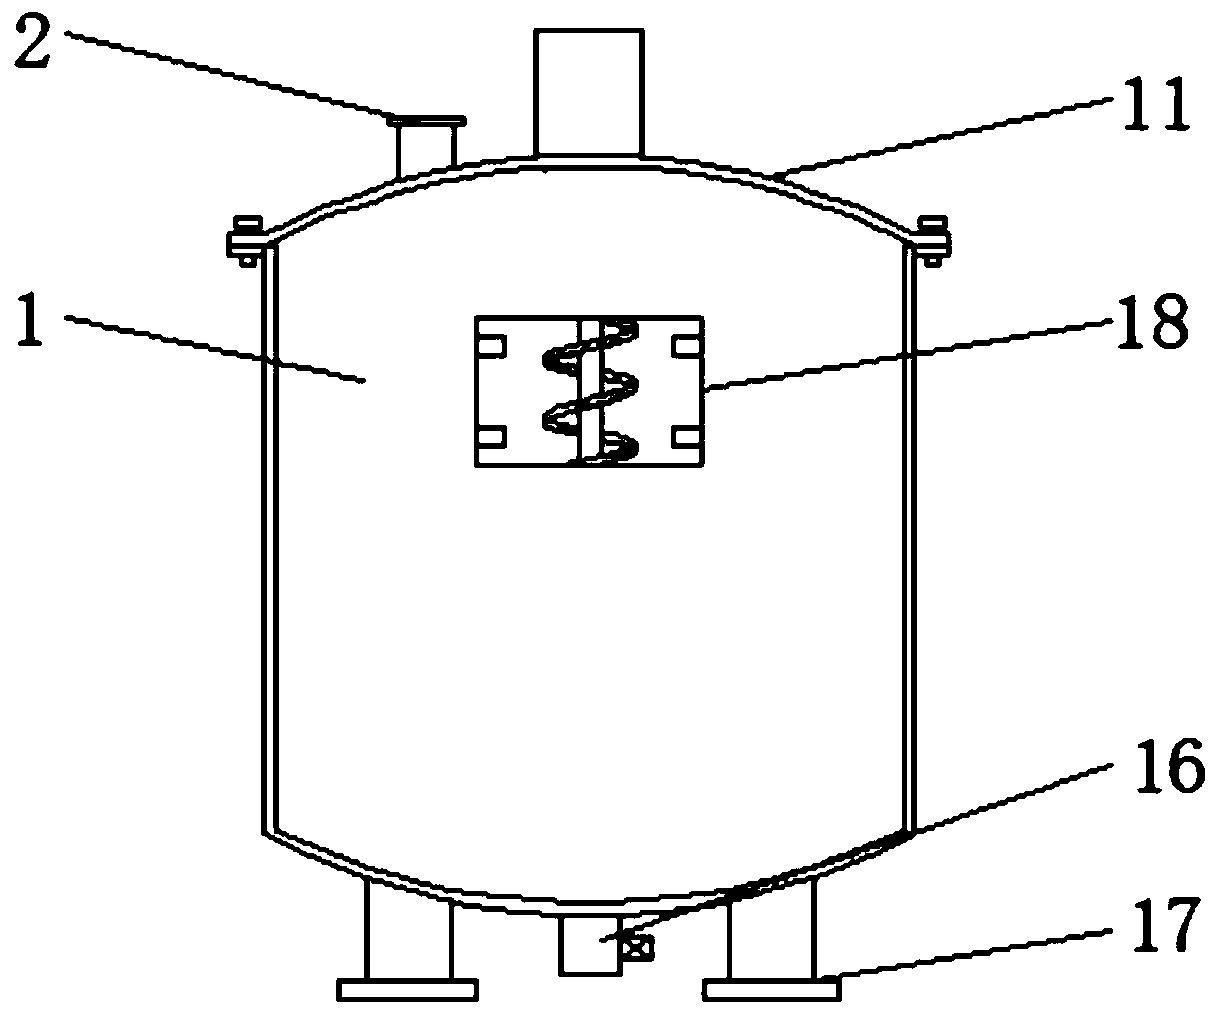 Chemical efficient stirring fermentation device